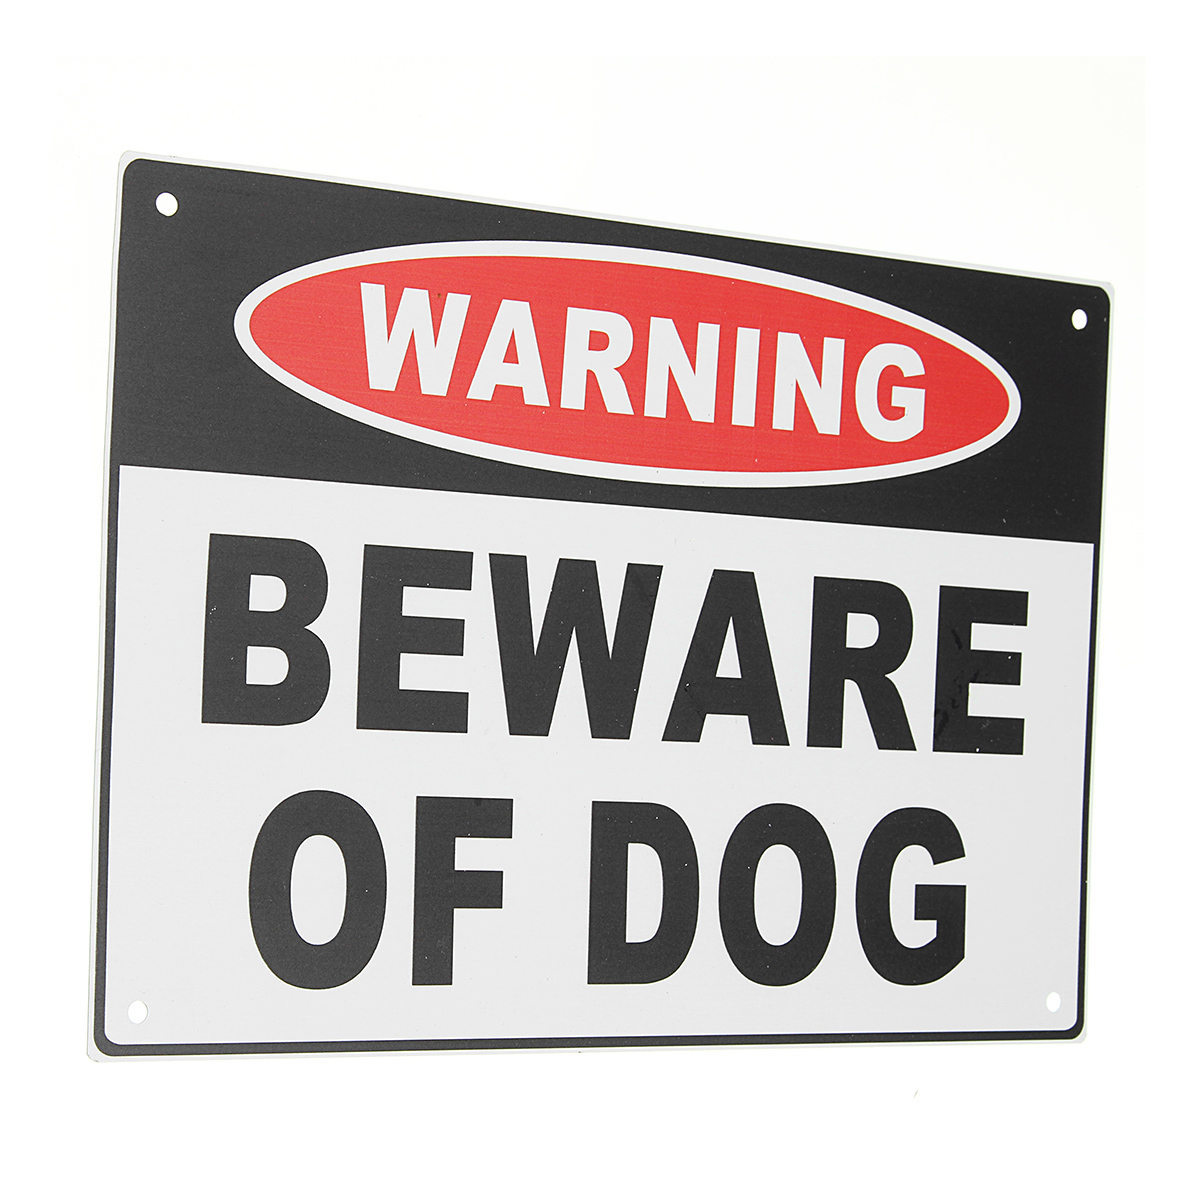 200x300mm-Warning-Beware-of-Dog-Aluminium-Safety-Warning-Sign-House-Door-Wall-Sticker-1329974-5